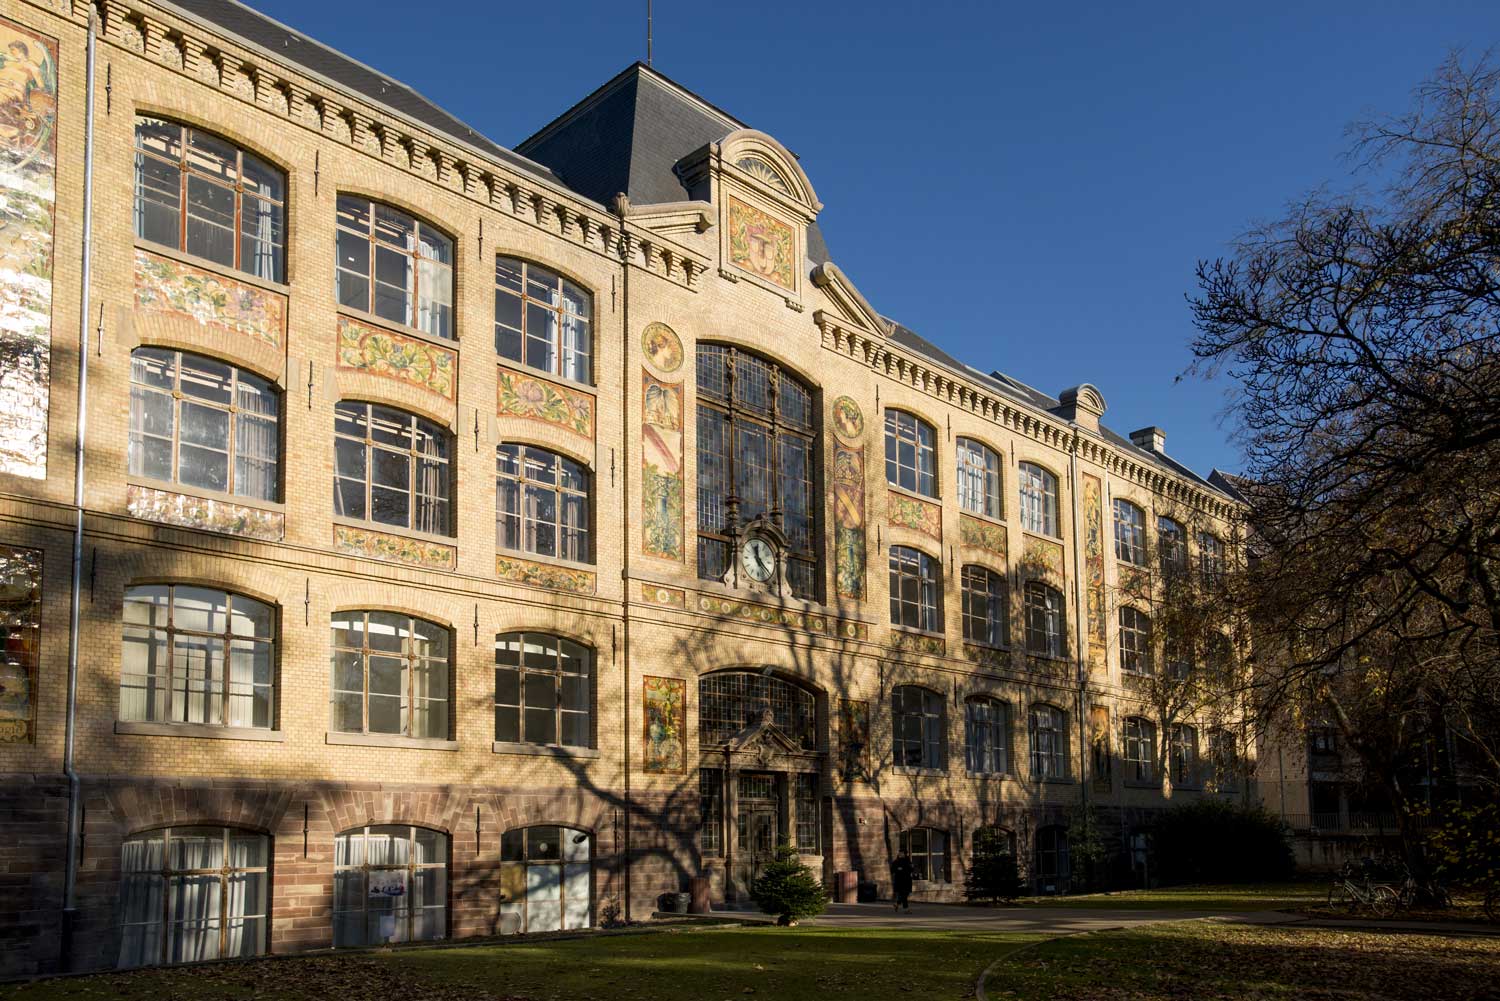 The building of the "Haute École des Arts du Rhin" (HEAR) in Strasbourg